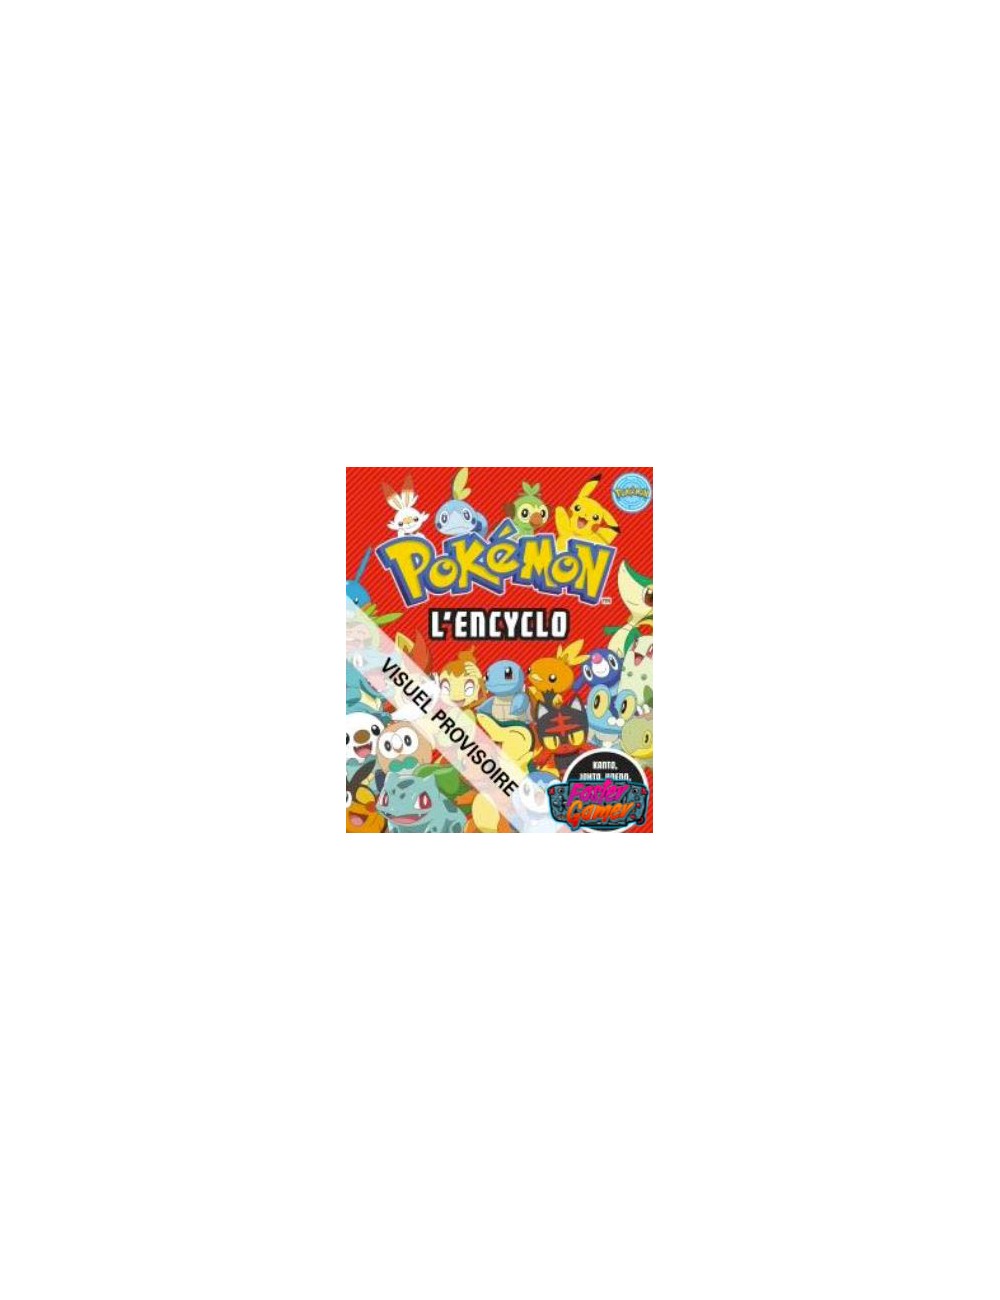 The Official Pokémon Legendary 1001 Stickers